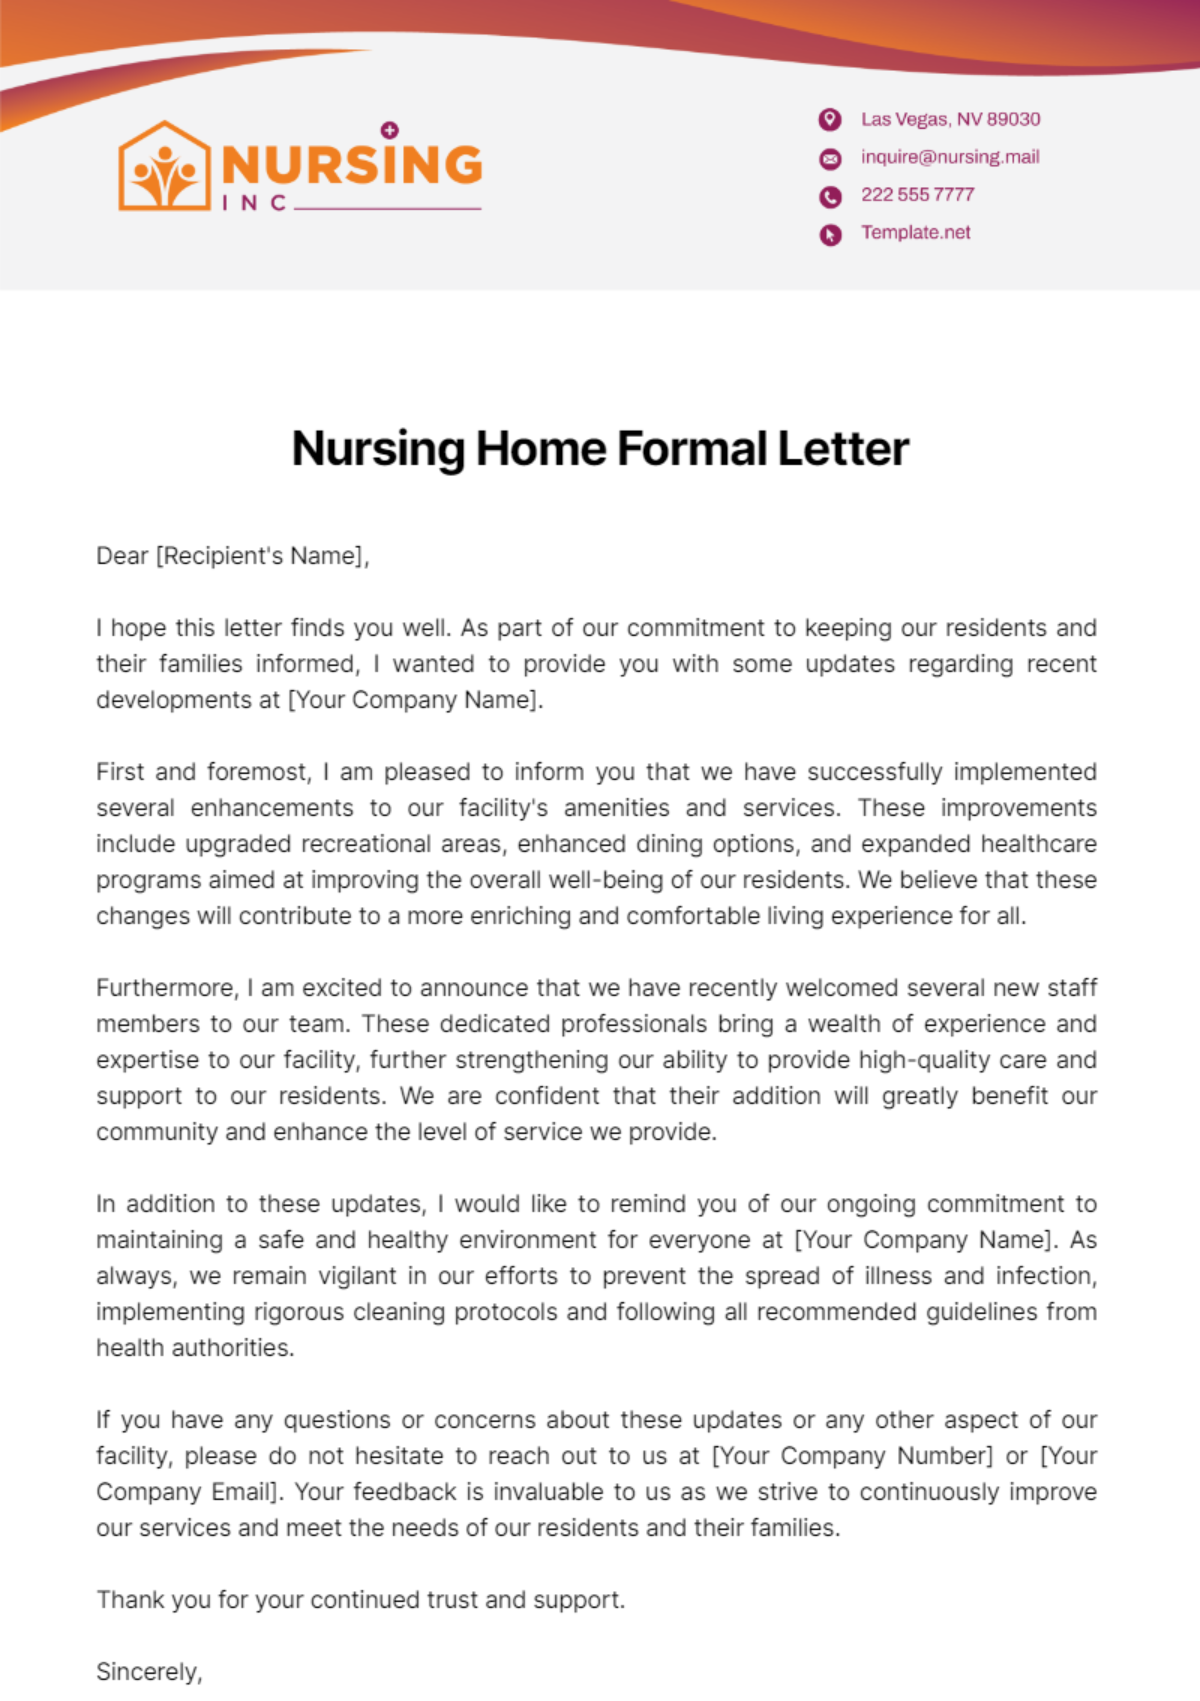 Nursing Home Formal Letter Template